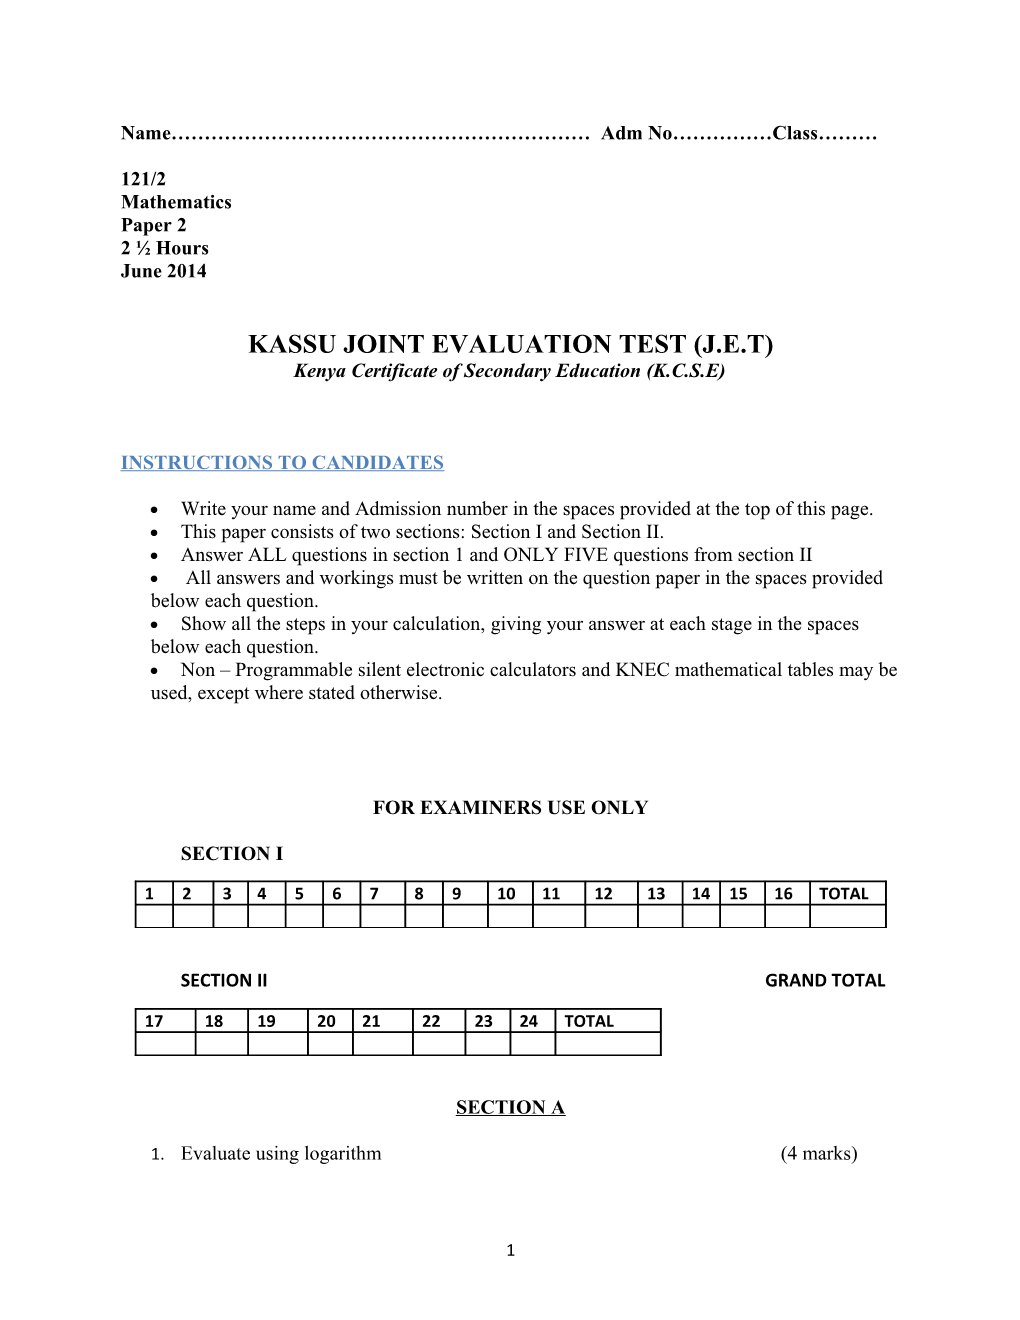 Kassu Joint Evaluation Test (J.E.T)